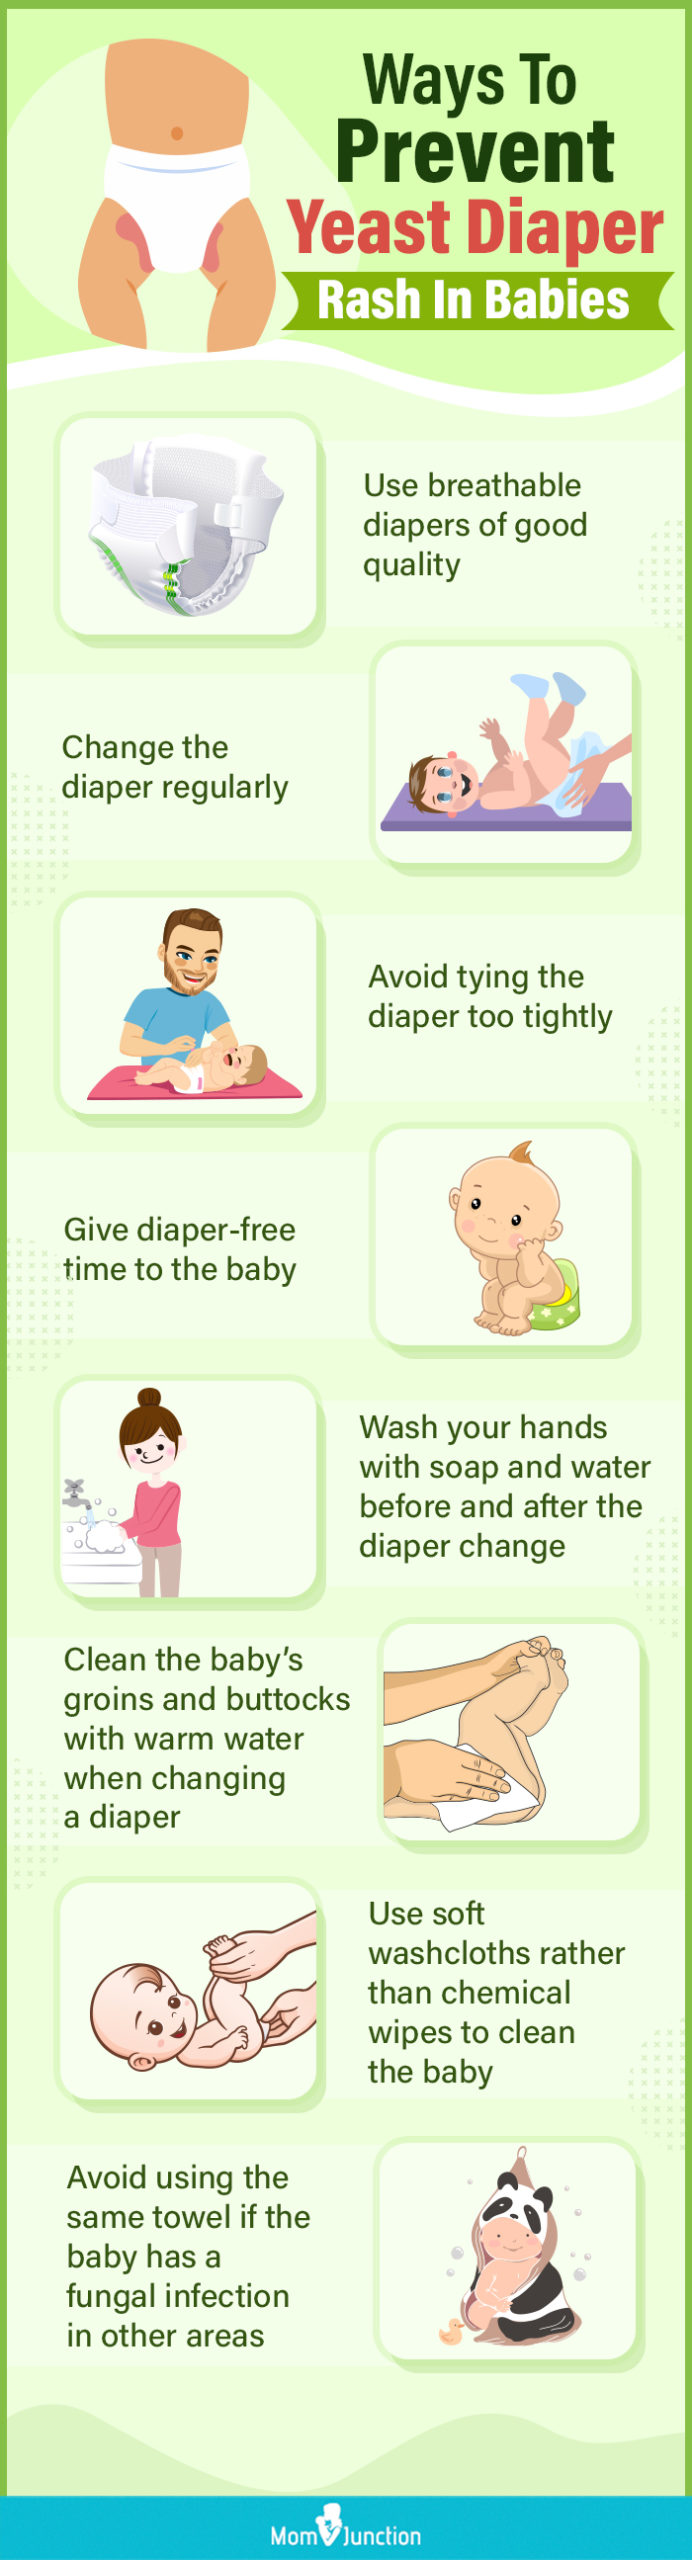 ways to prevent yeast diaper rash in babies (infographic)